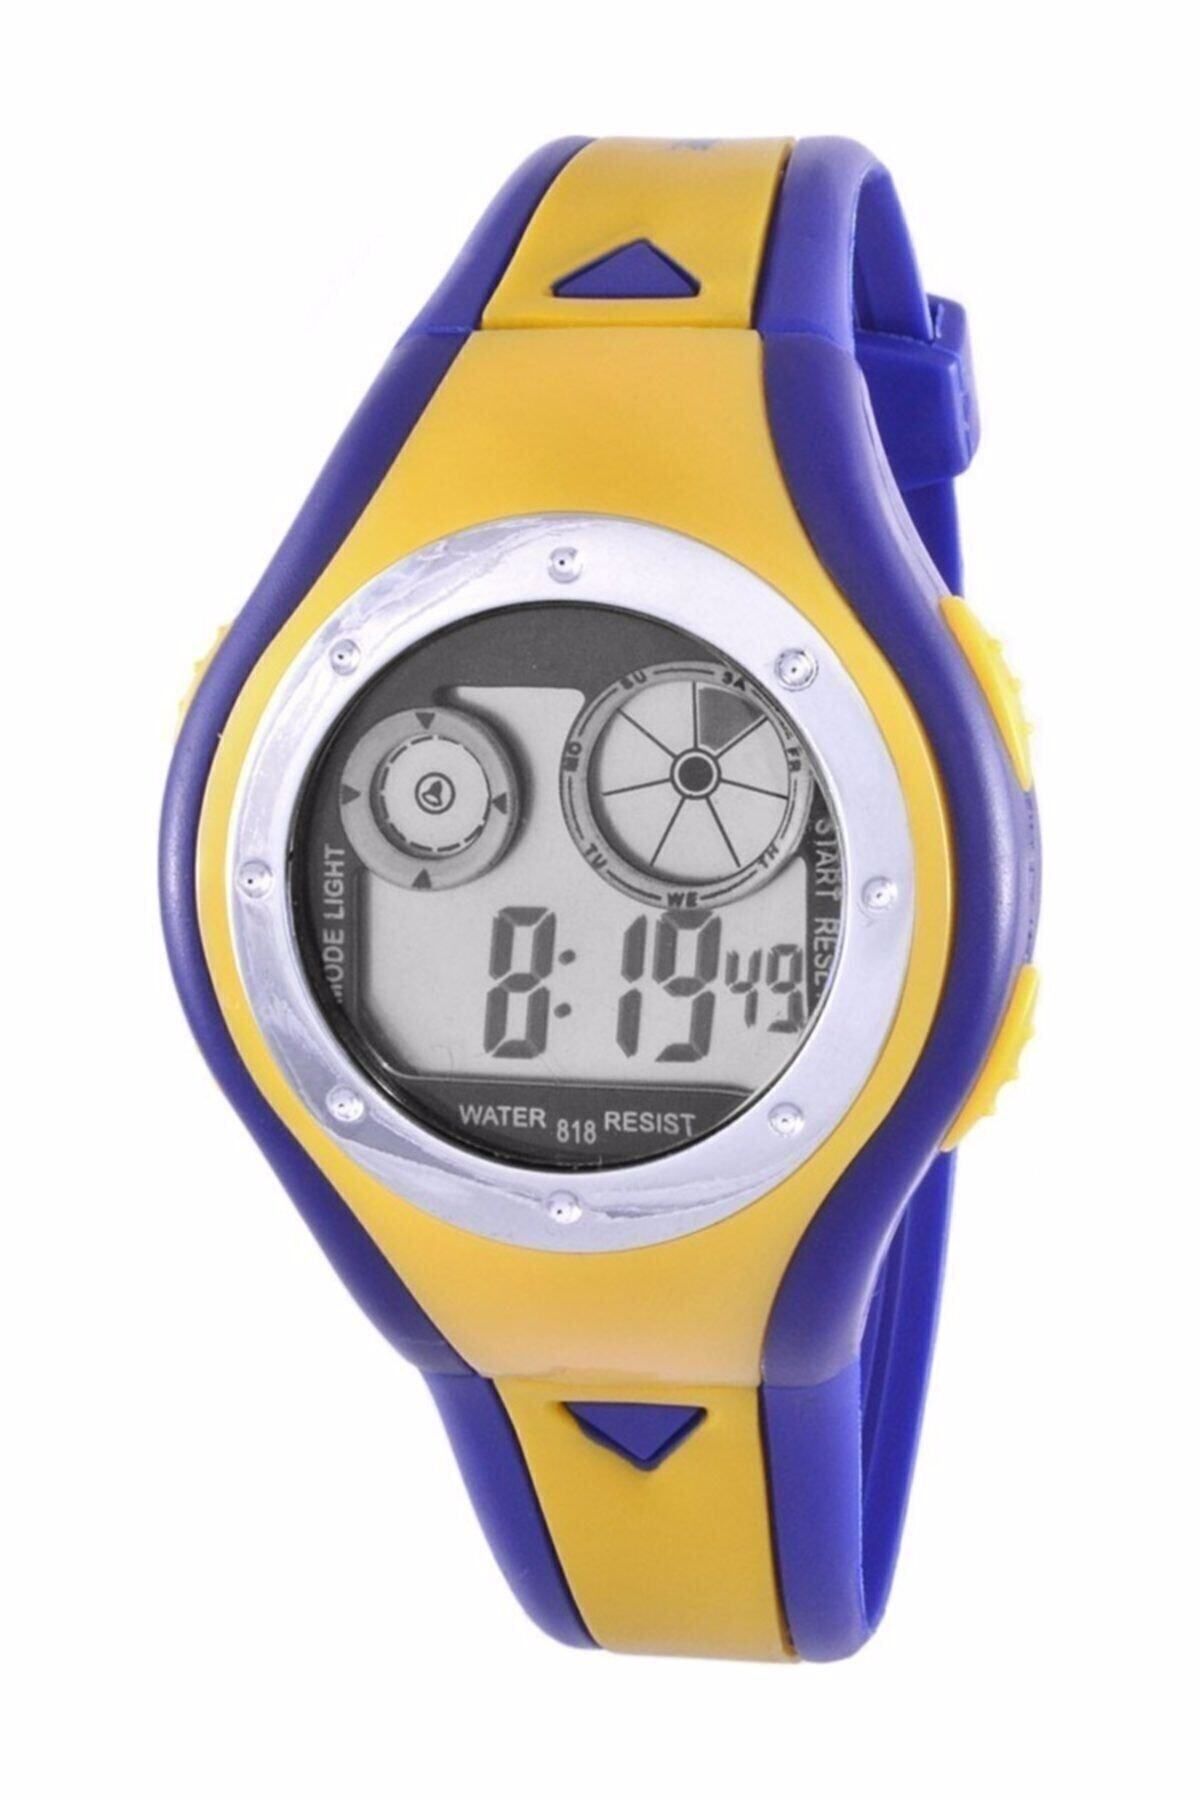 ZAVİRA Sarı Lacivert Taraftar Dijital Spor Çocuk Kol Saati Alarm Kronometre